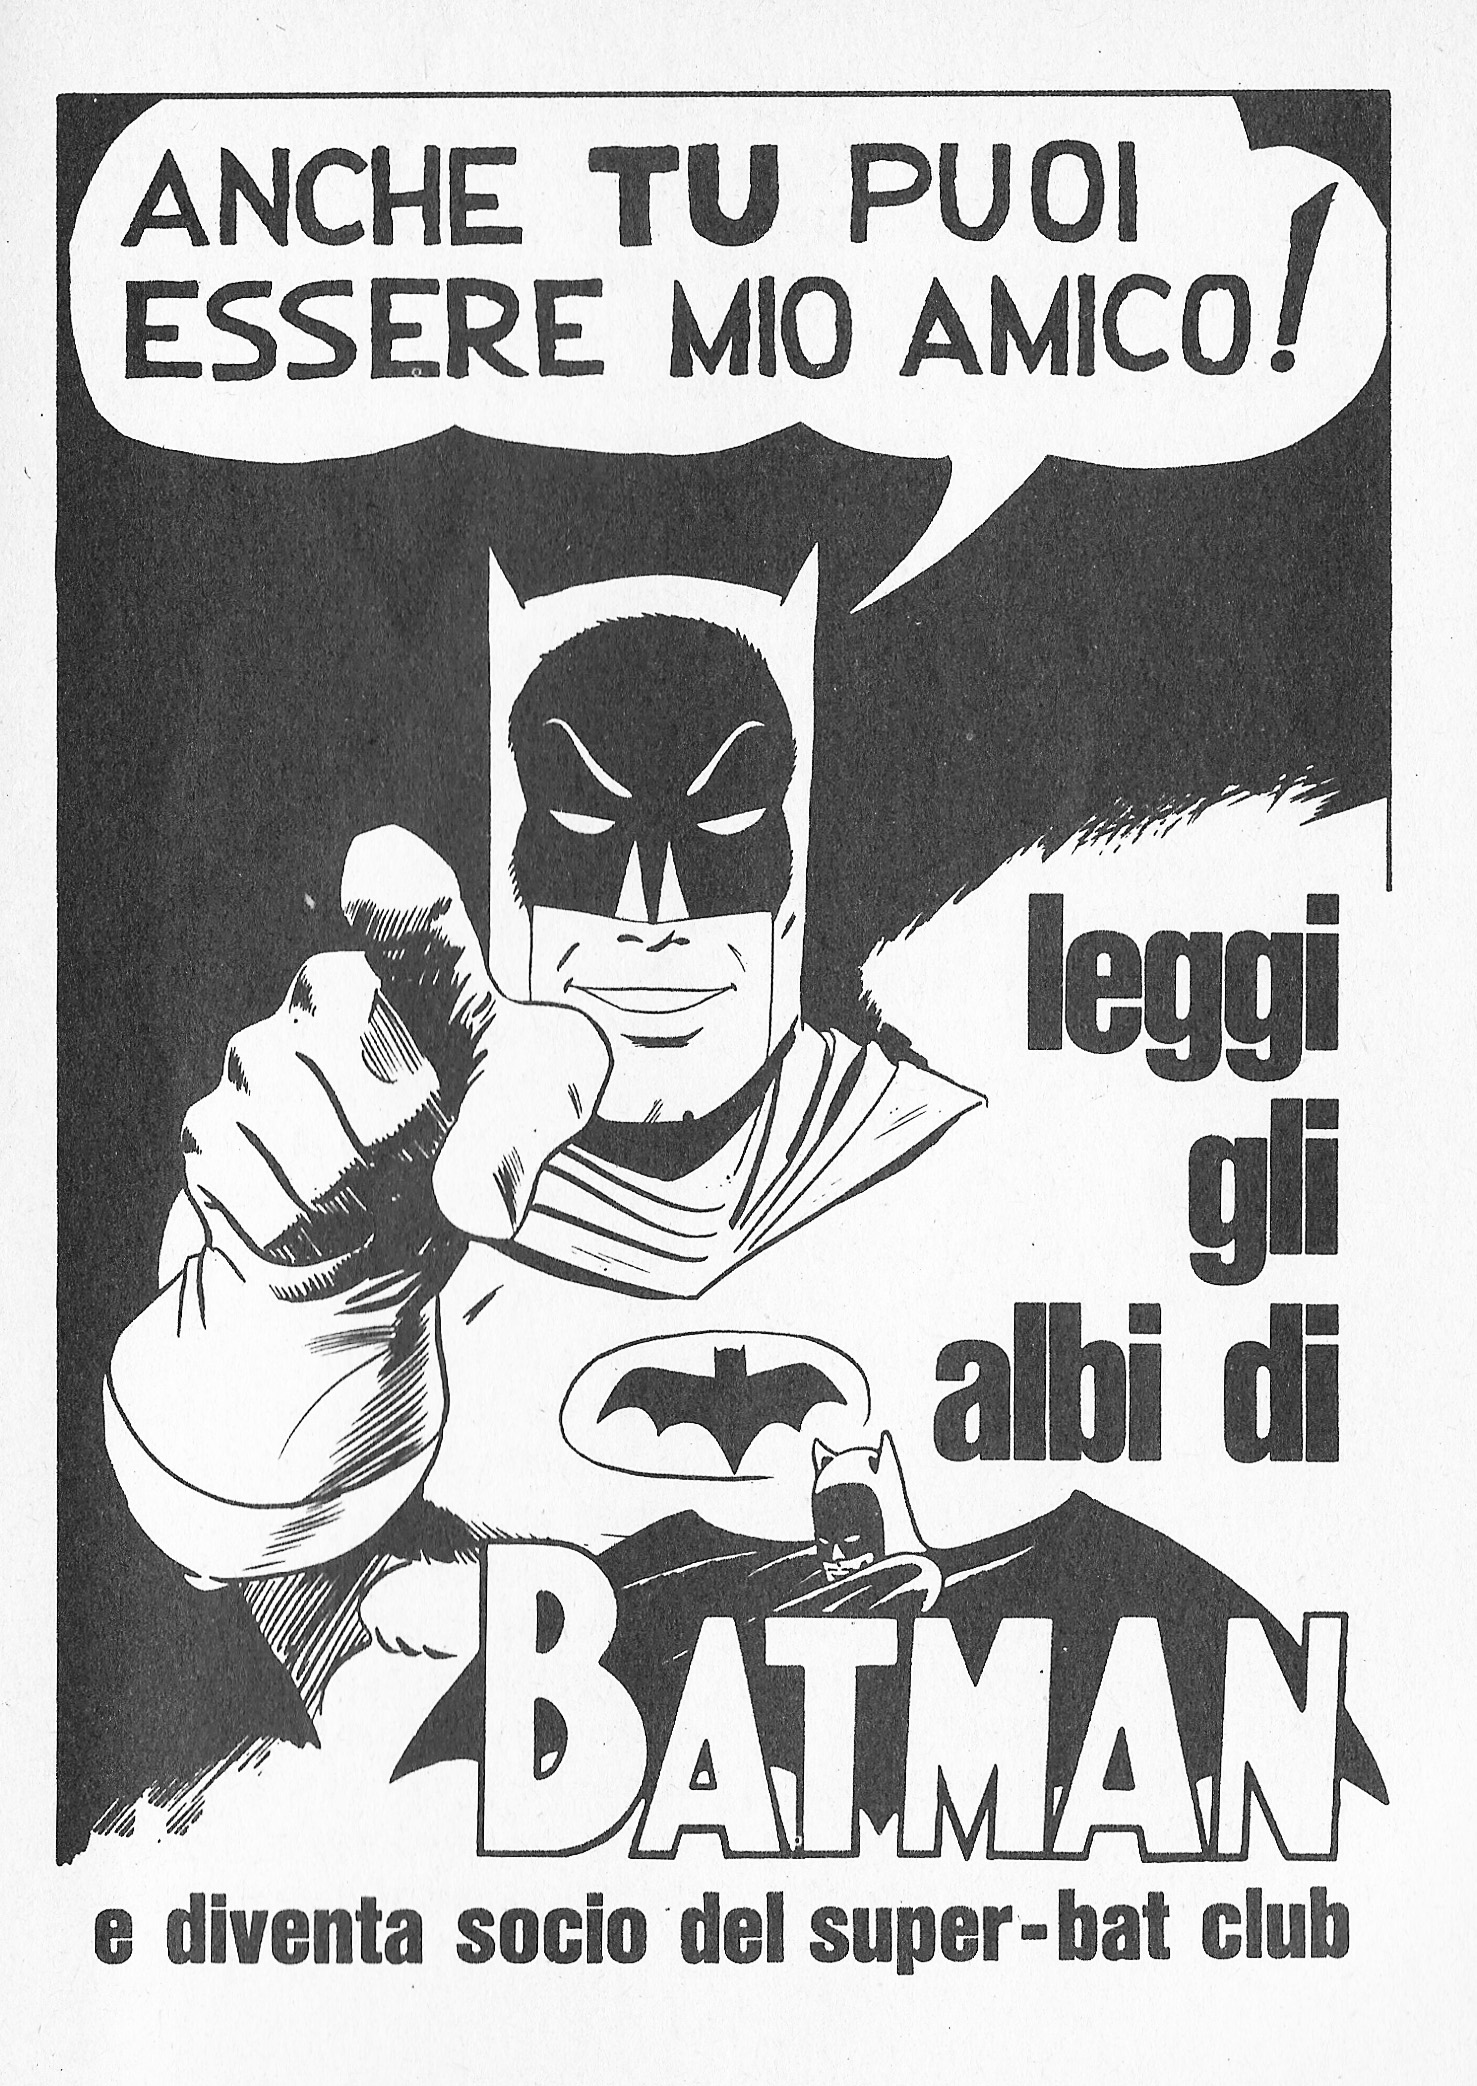 Batman vintage advertising